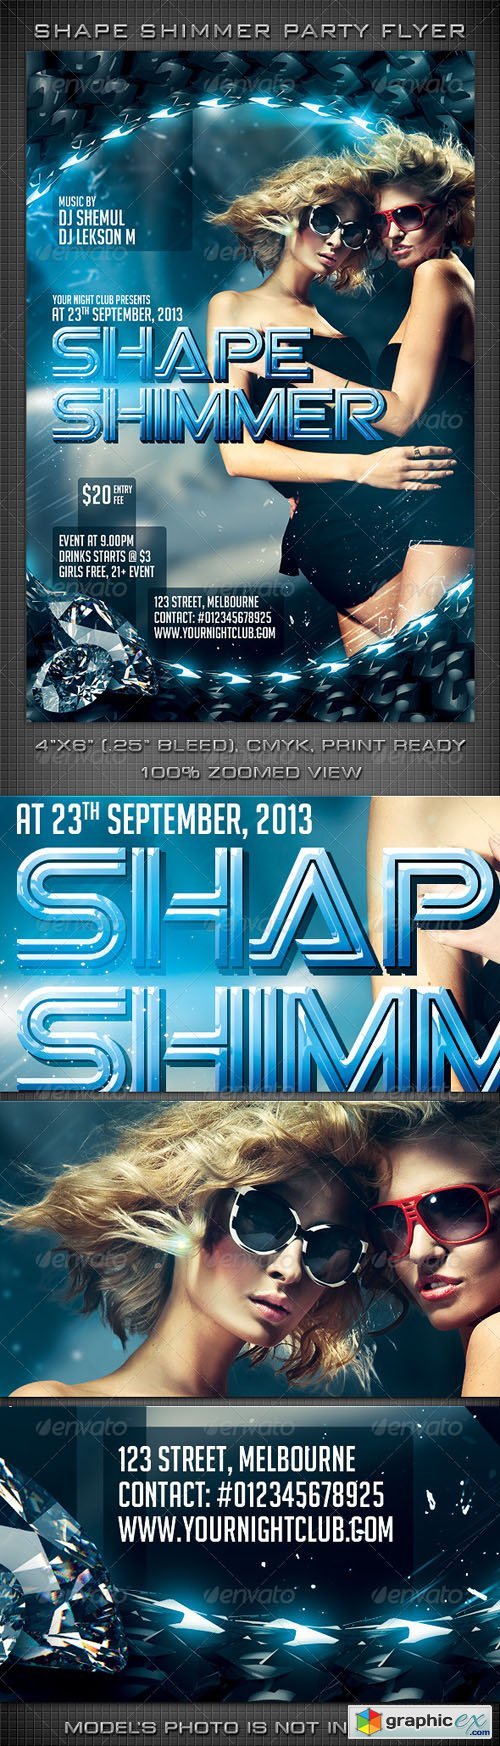 Shape Shimmer Party Flyer